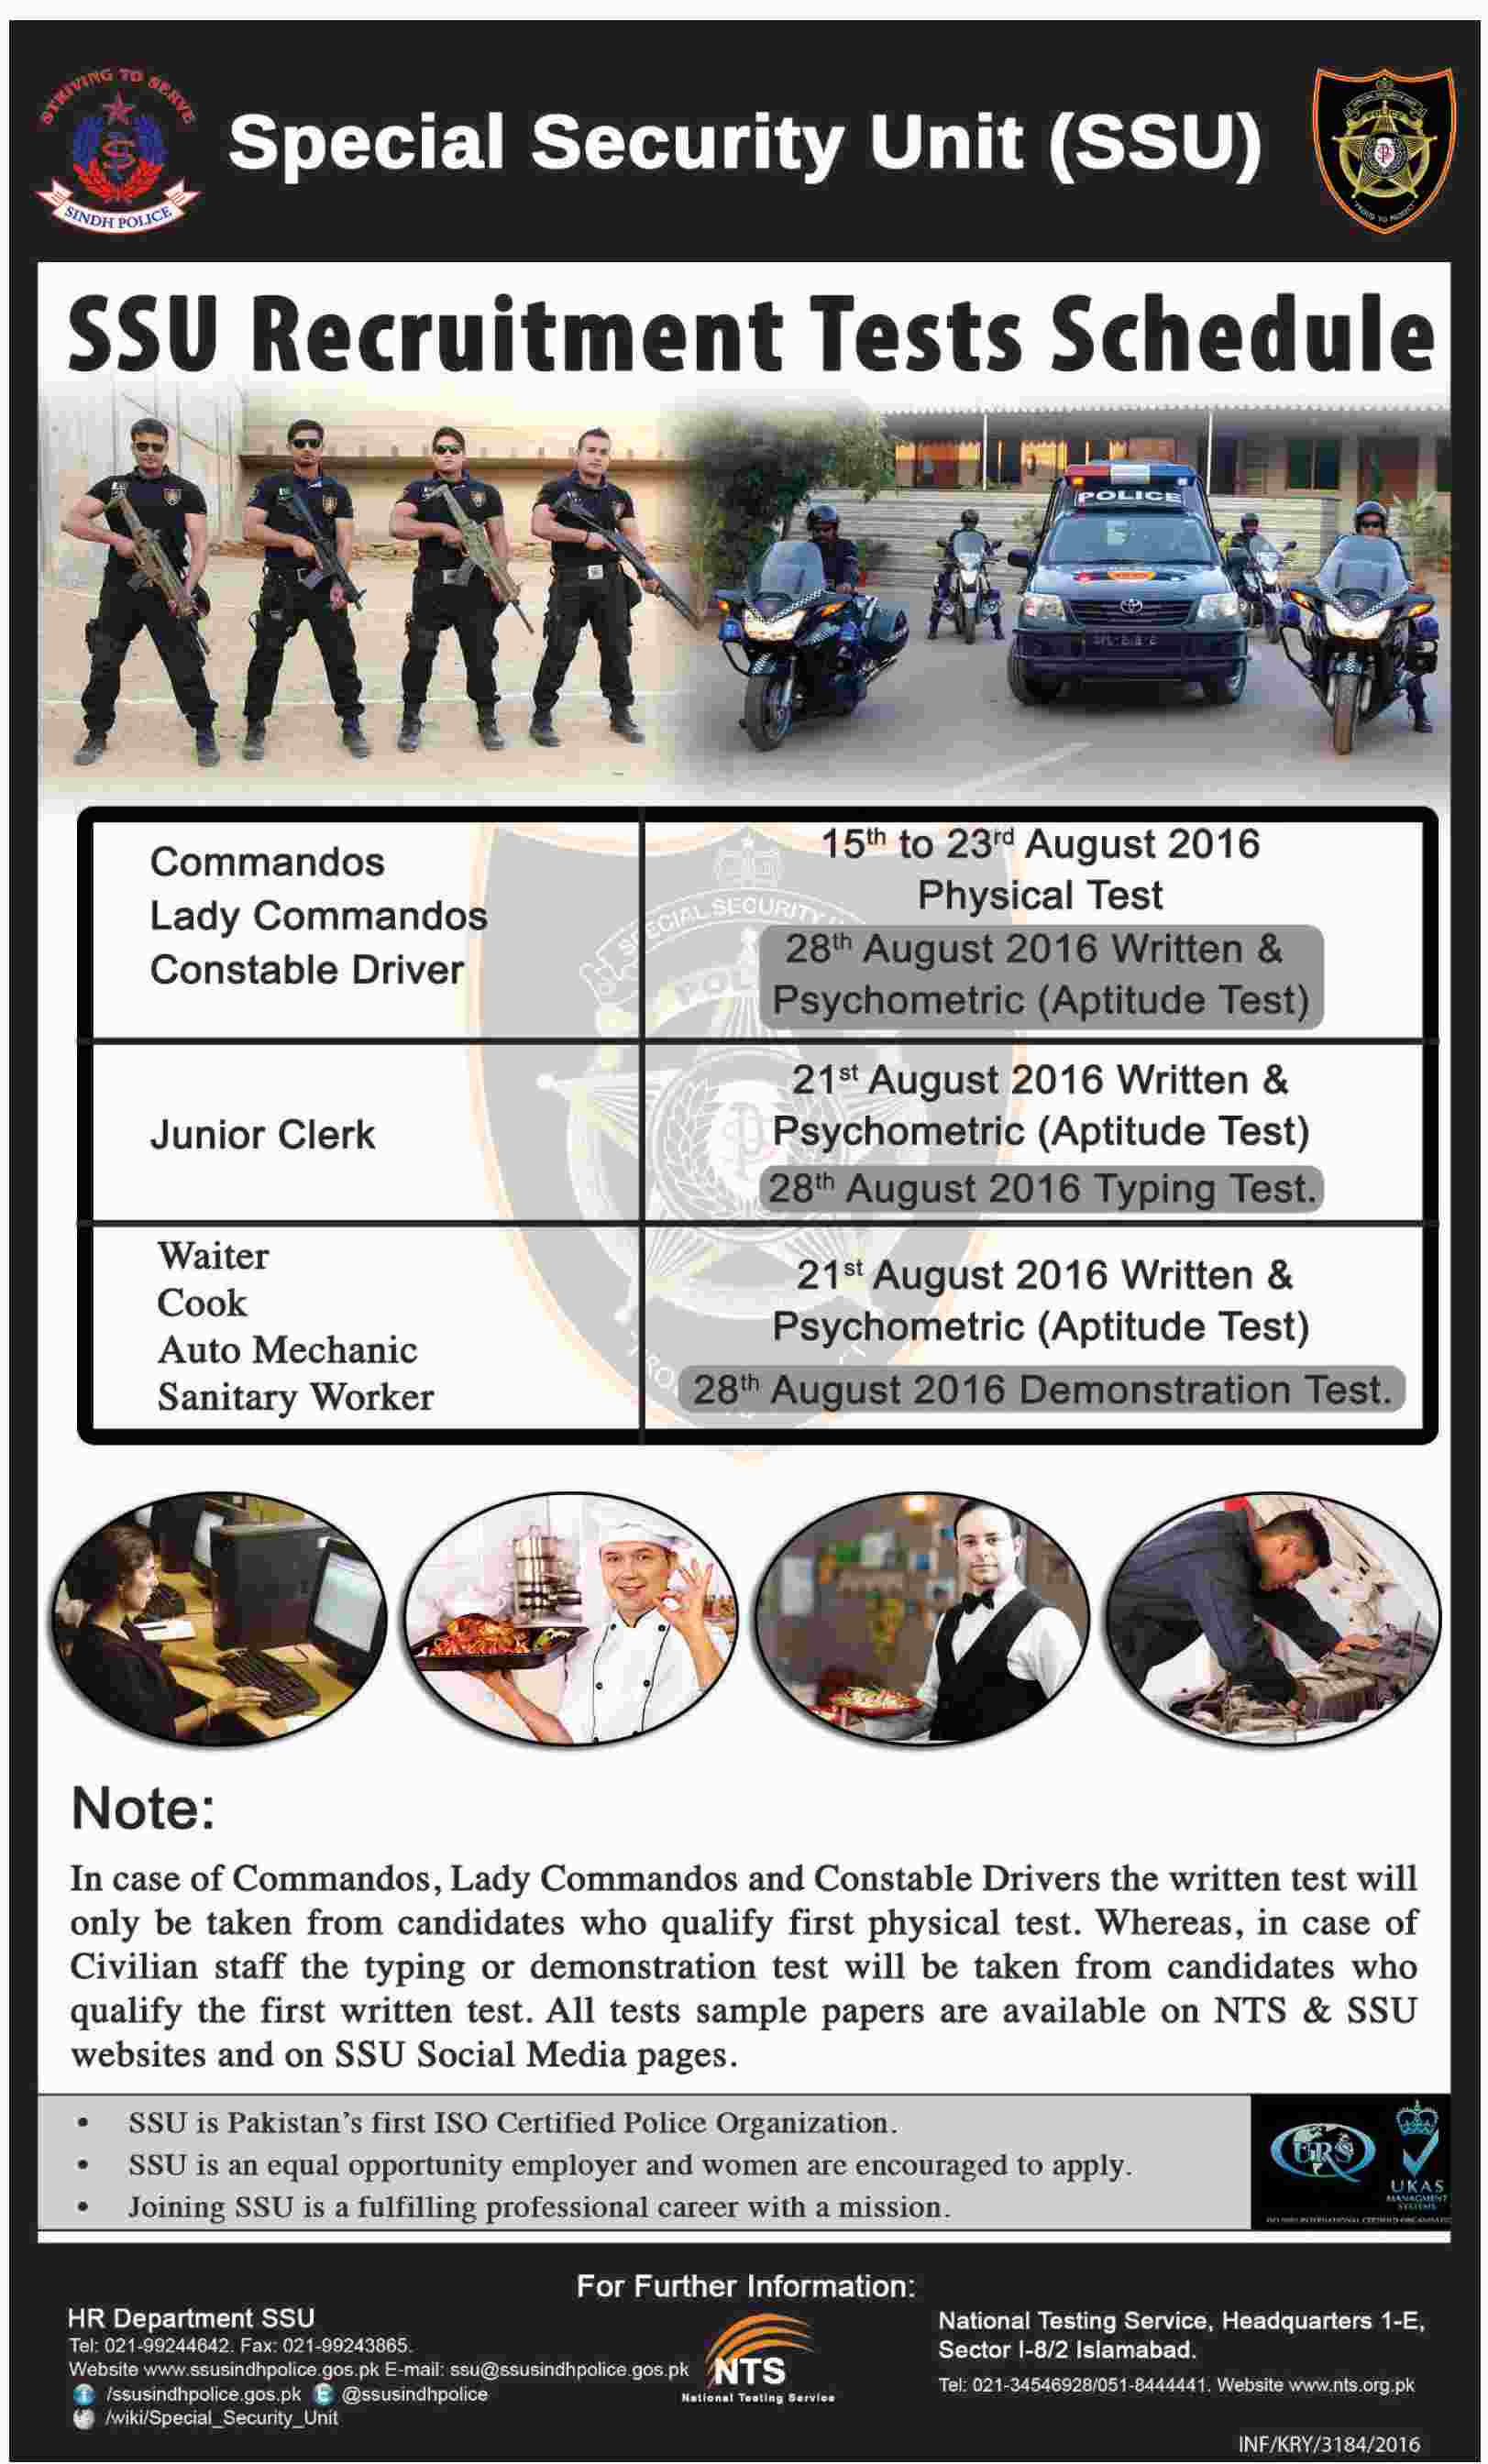 SSU Recruitment Tests Schedule (Commandos, Lady Commandos, Constable Driver, Junior Clerk, cook Mechanic, Sanitary Worker)